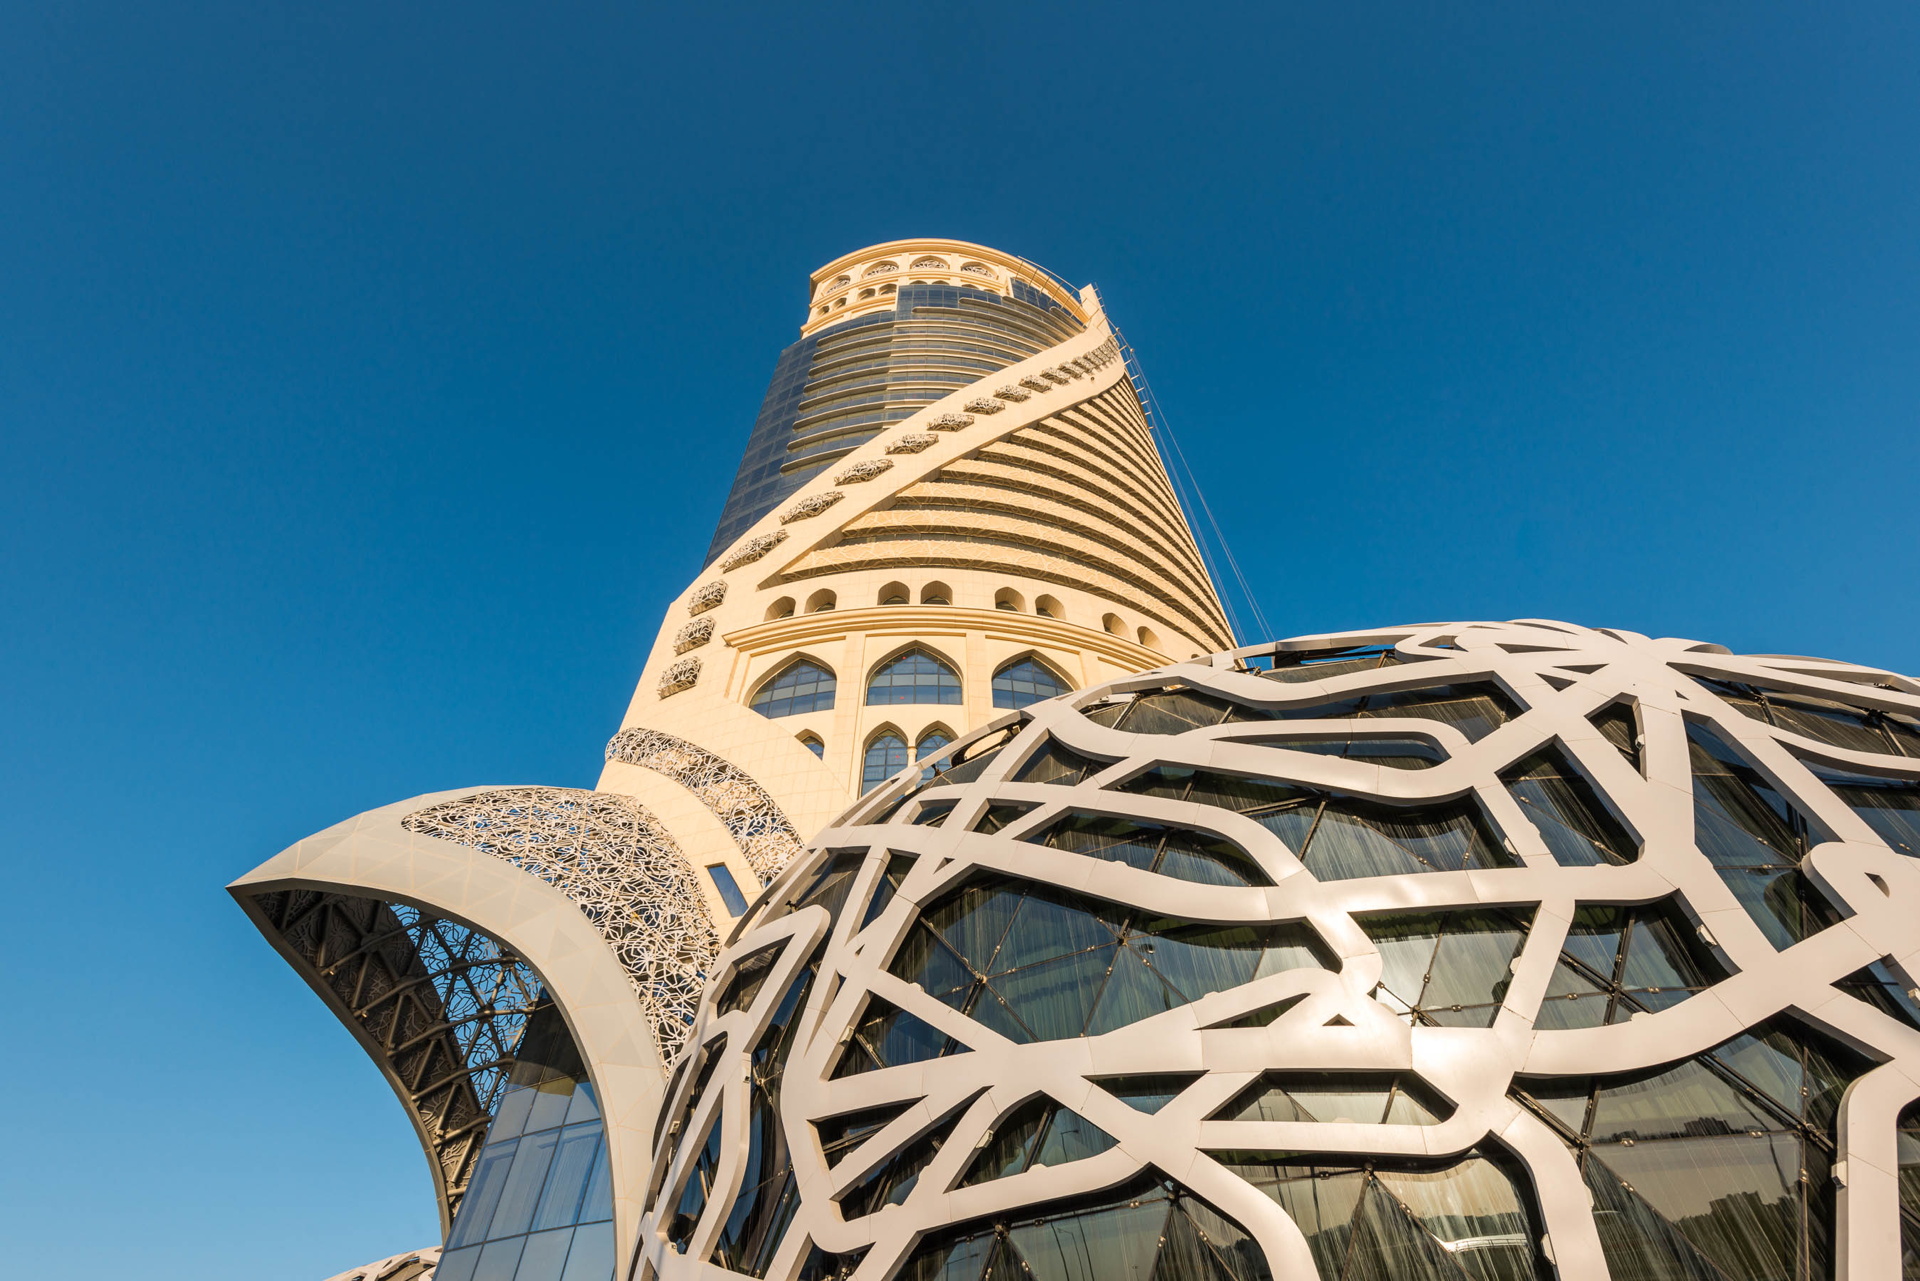 South West Architecture con FMG: Mondrian Doha en Qatar<br />
